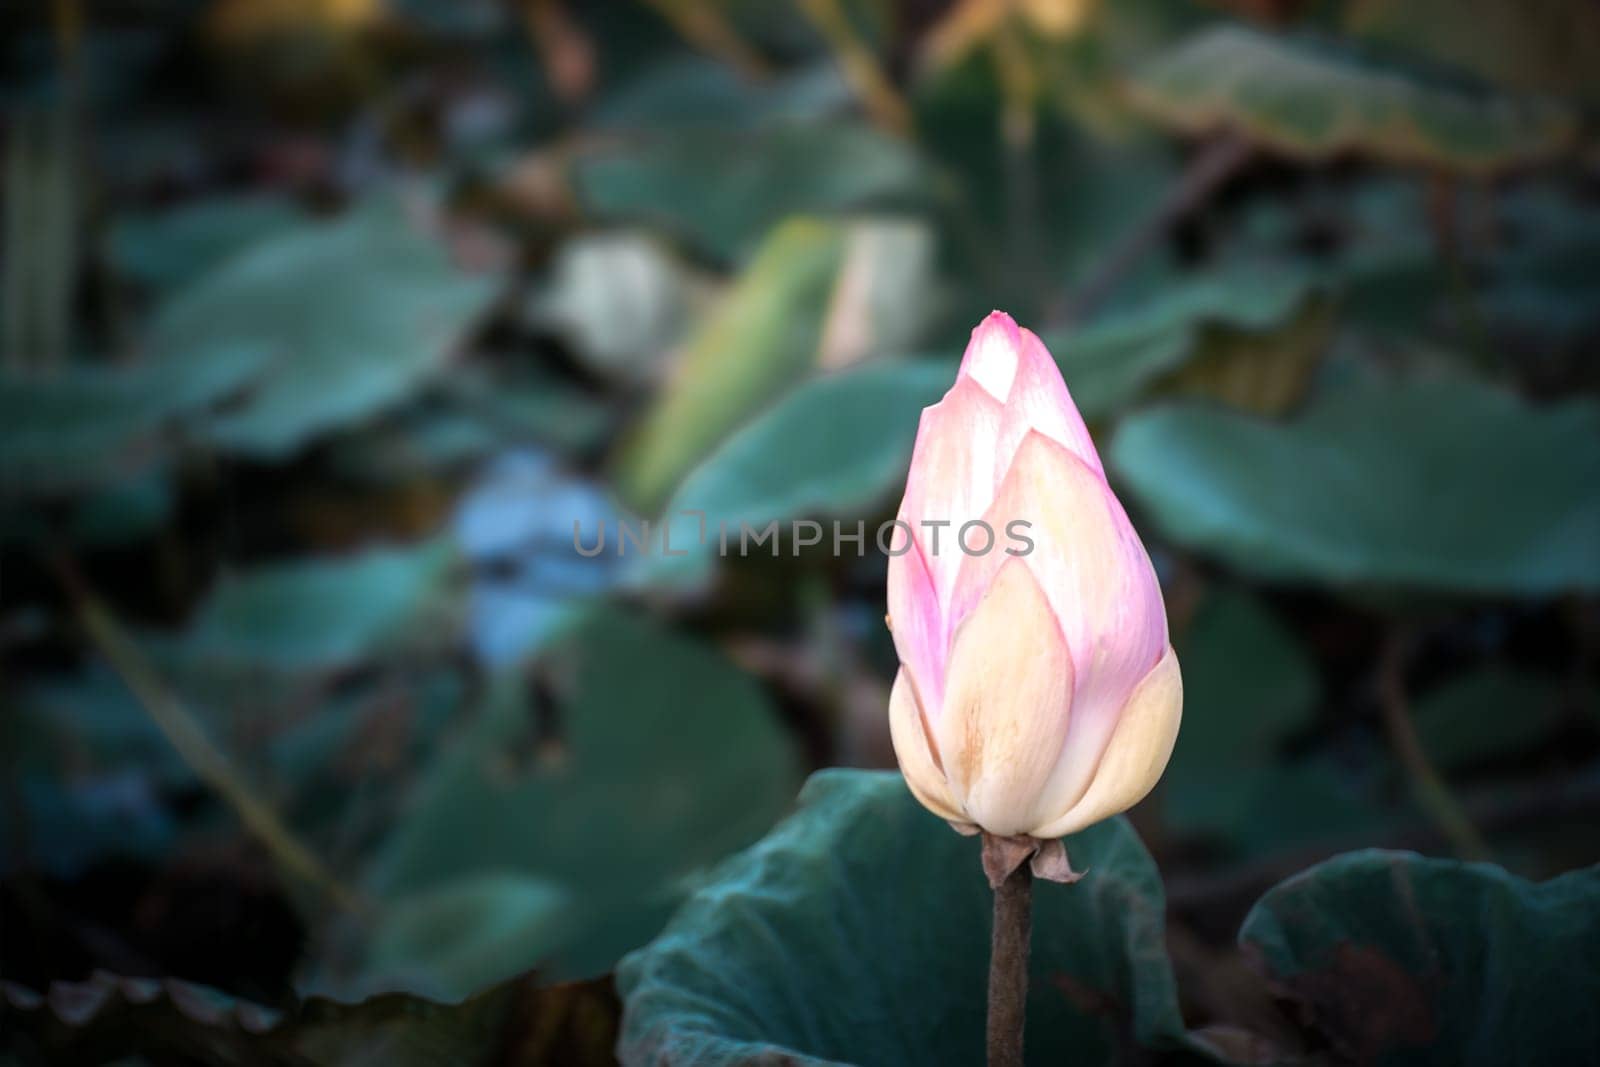 Lotus flower (Lotus or Nelumbo) by NongEngEng